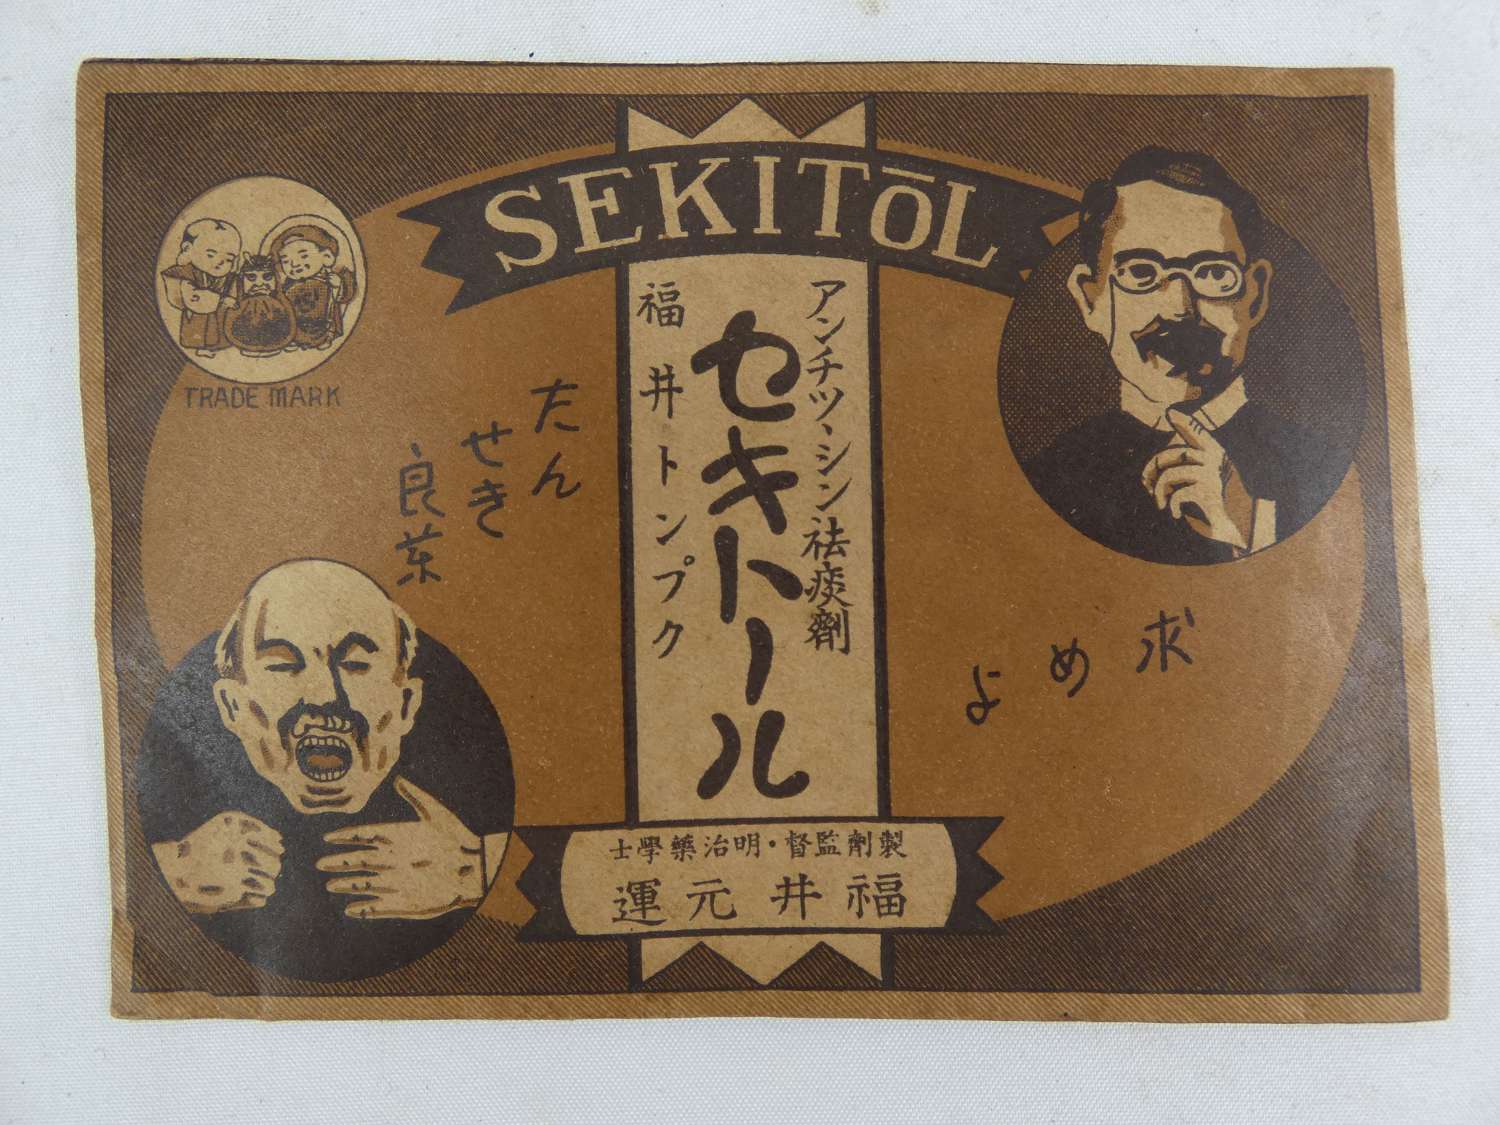 WW2 Japanese Indigestion Relief Powder